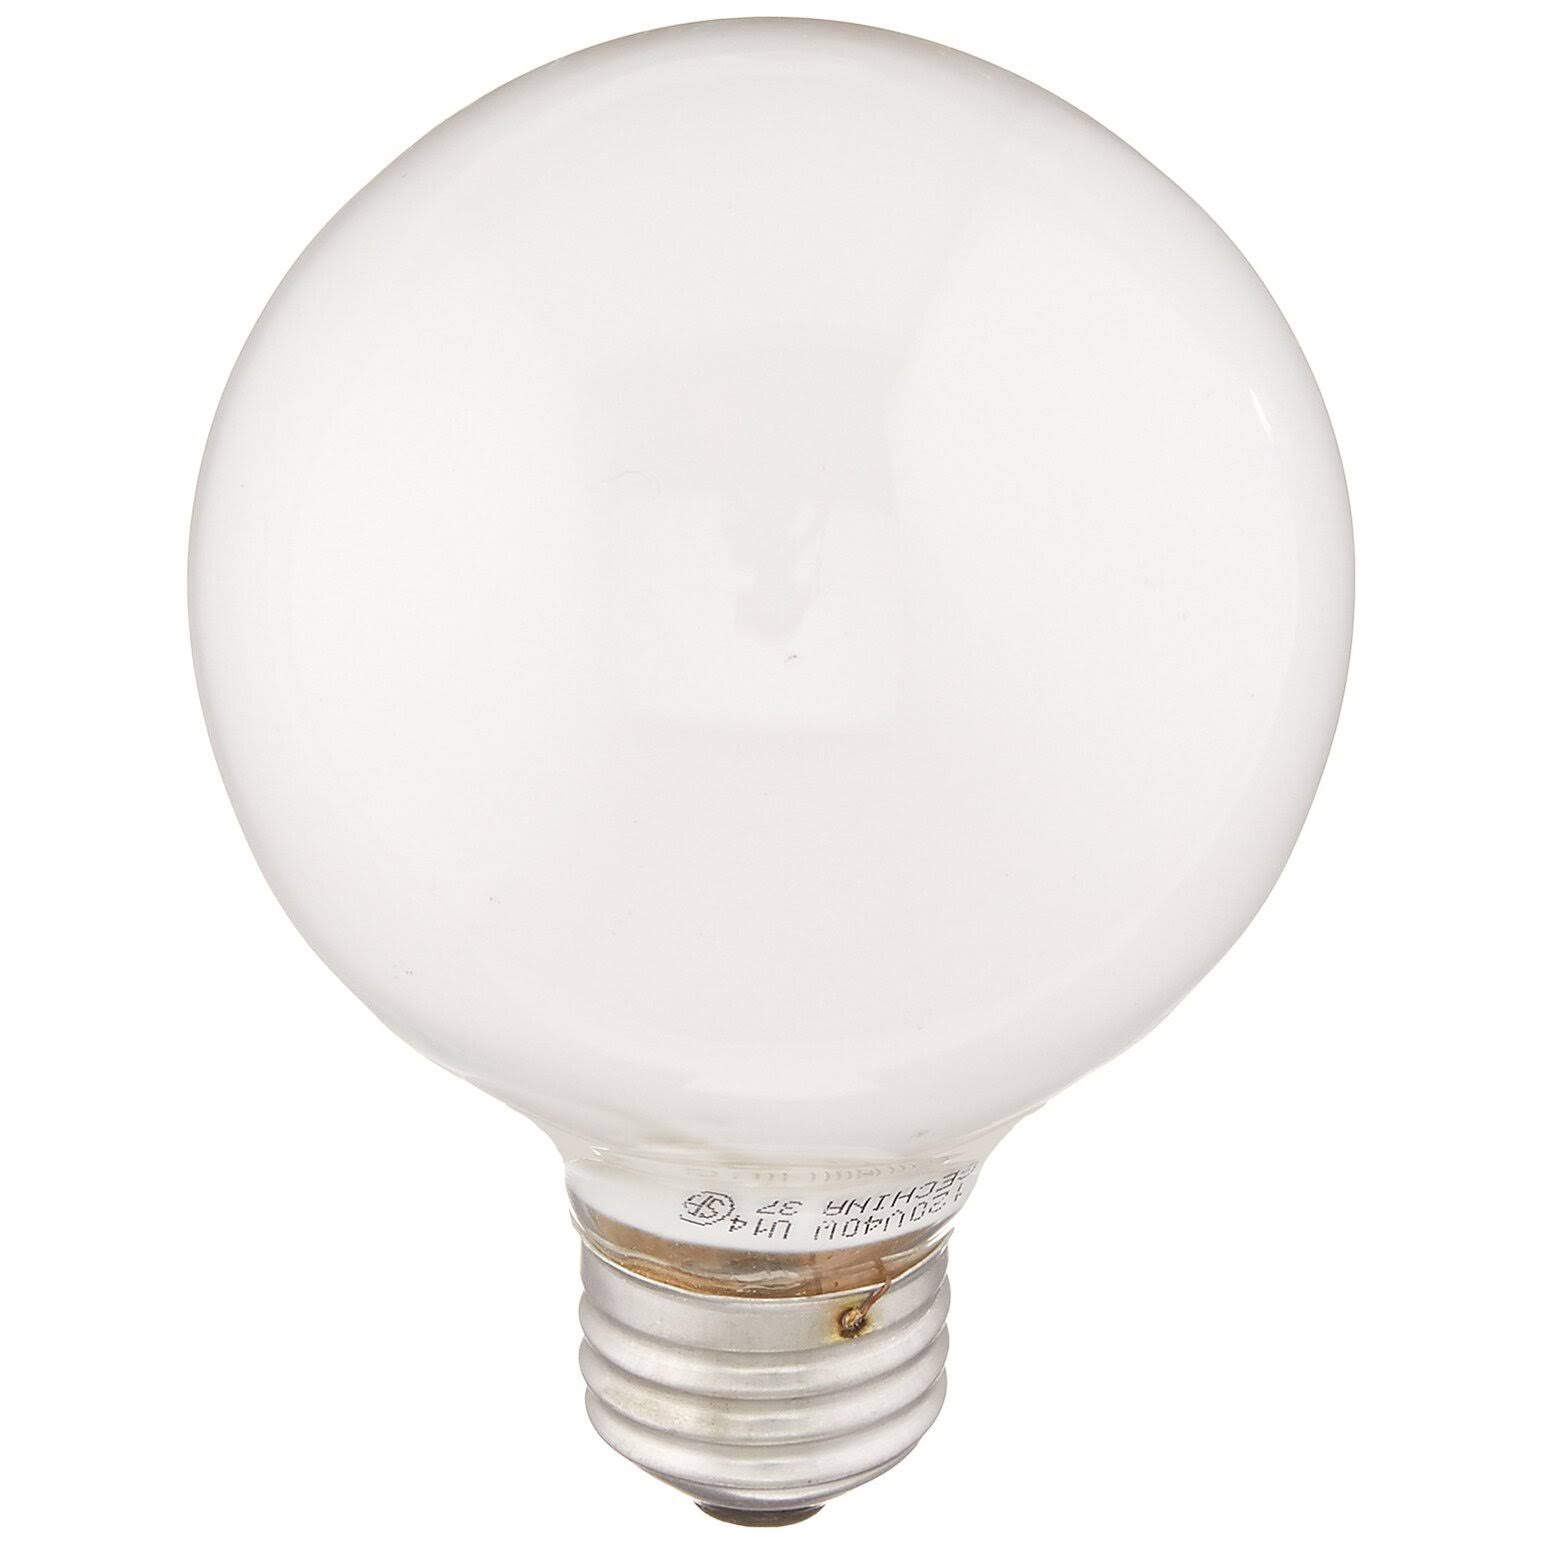 Ge Decorative Light Bulb - 40W, Soft White, G25